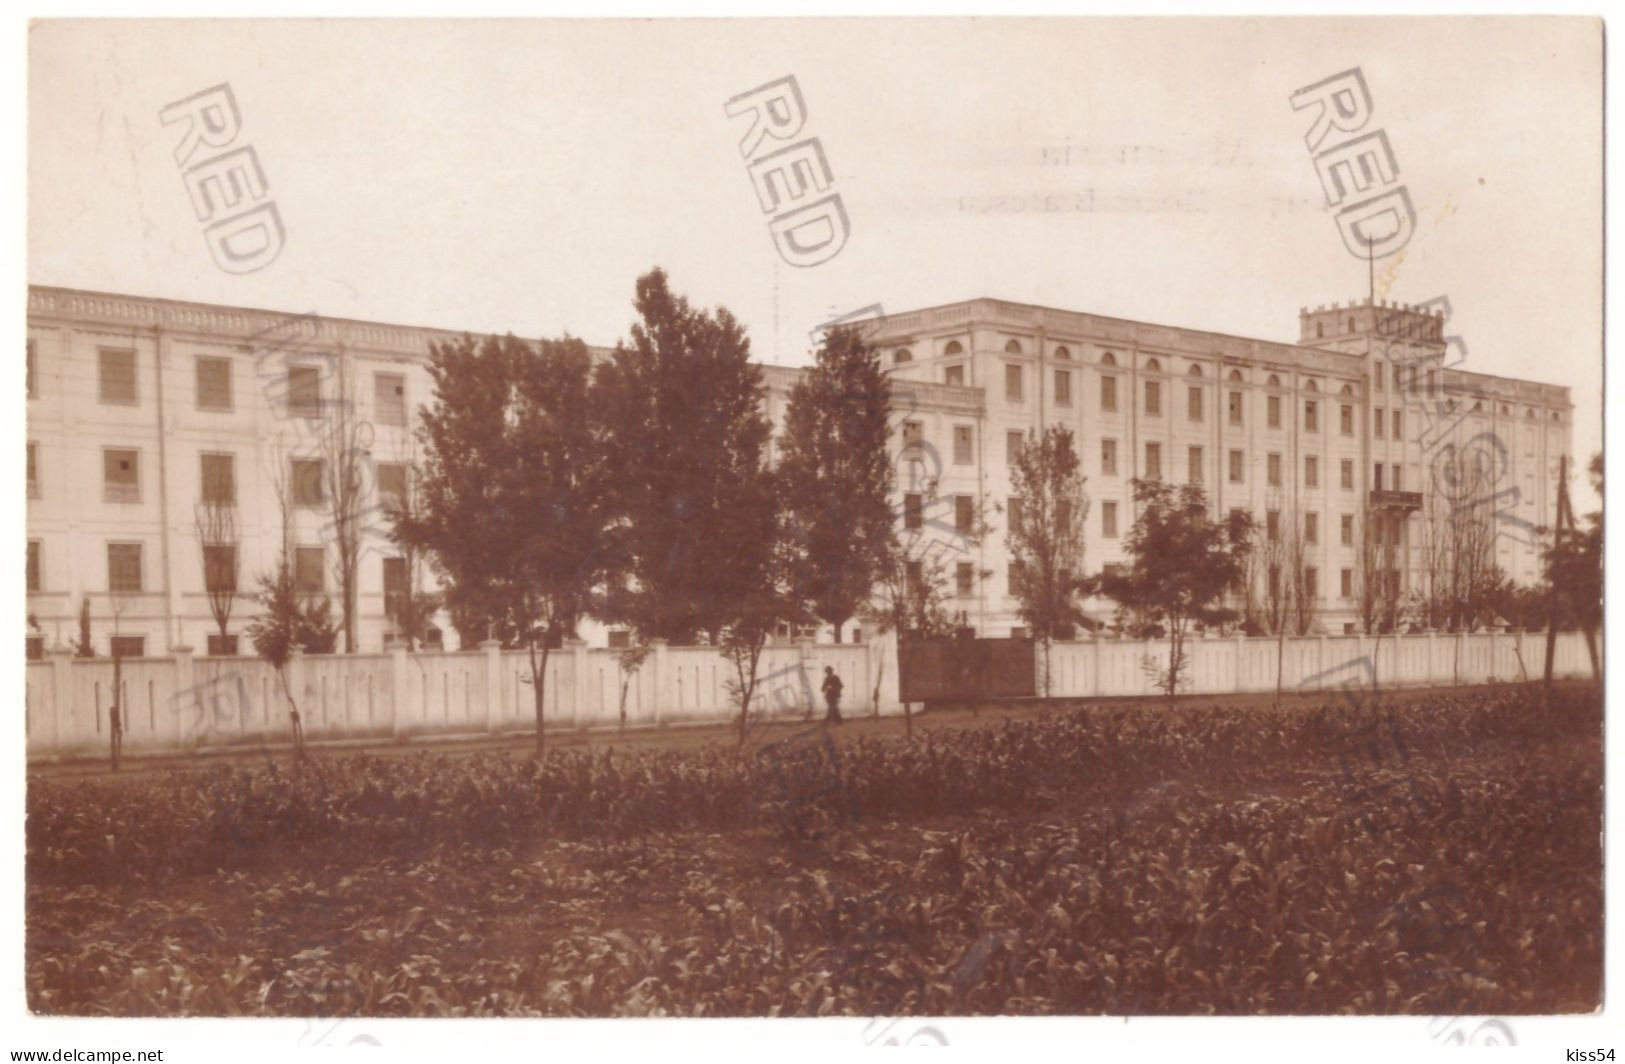 RO 47 - 25265 ALEXANDRIA, Teleorman, Bratescu Mill, Romania - Old Postcard - Used - Romania